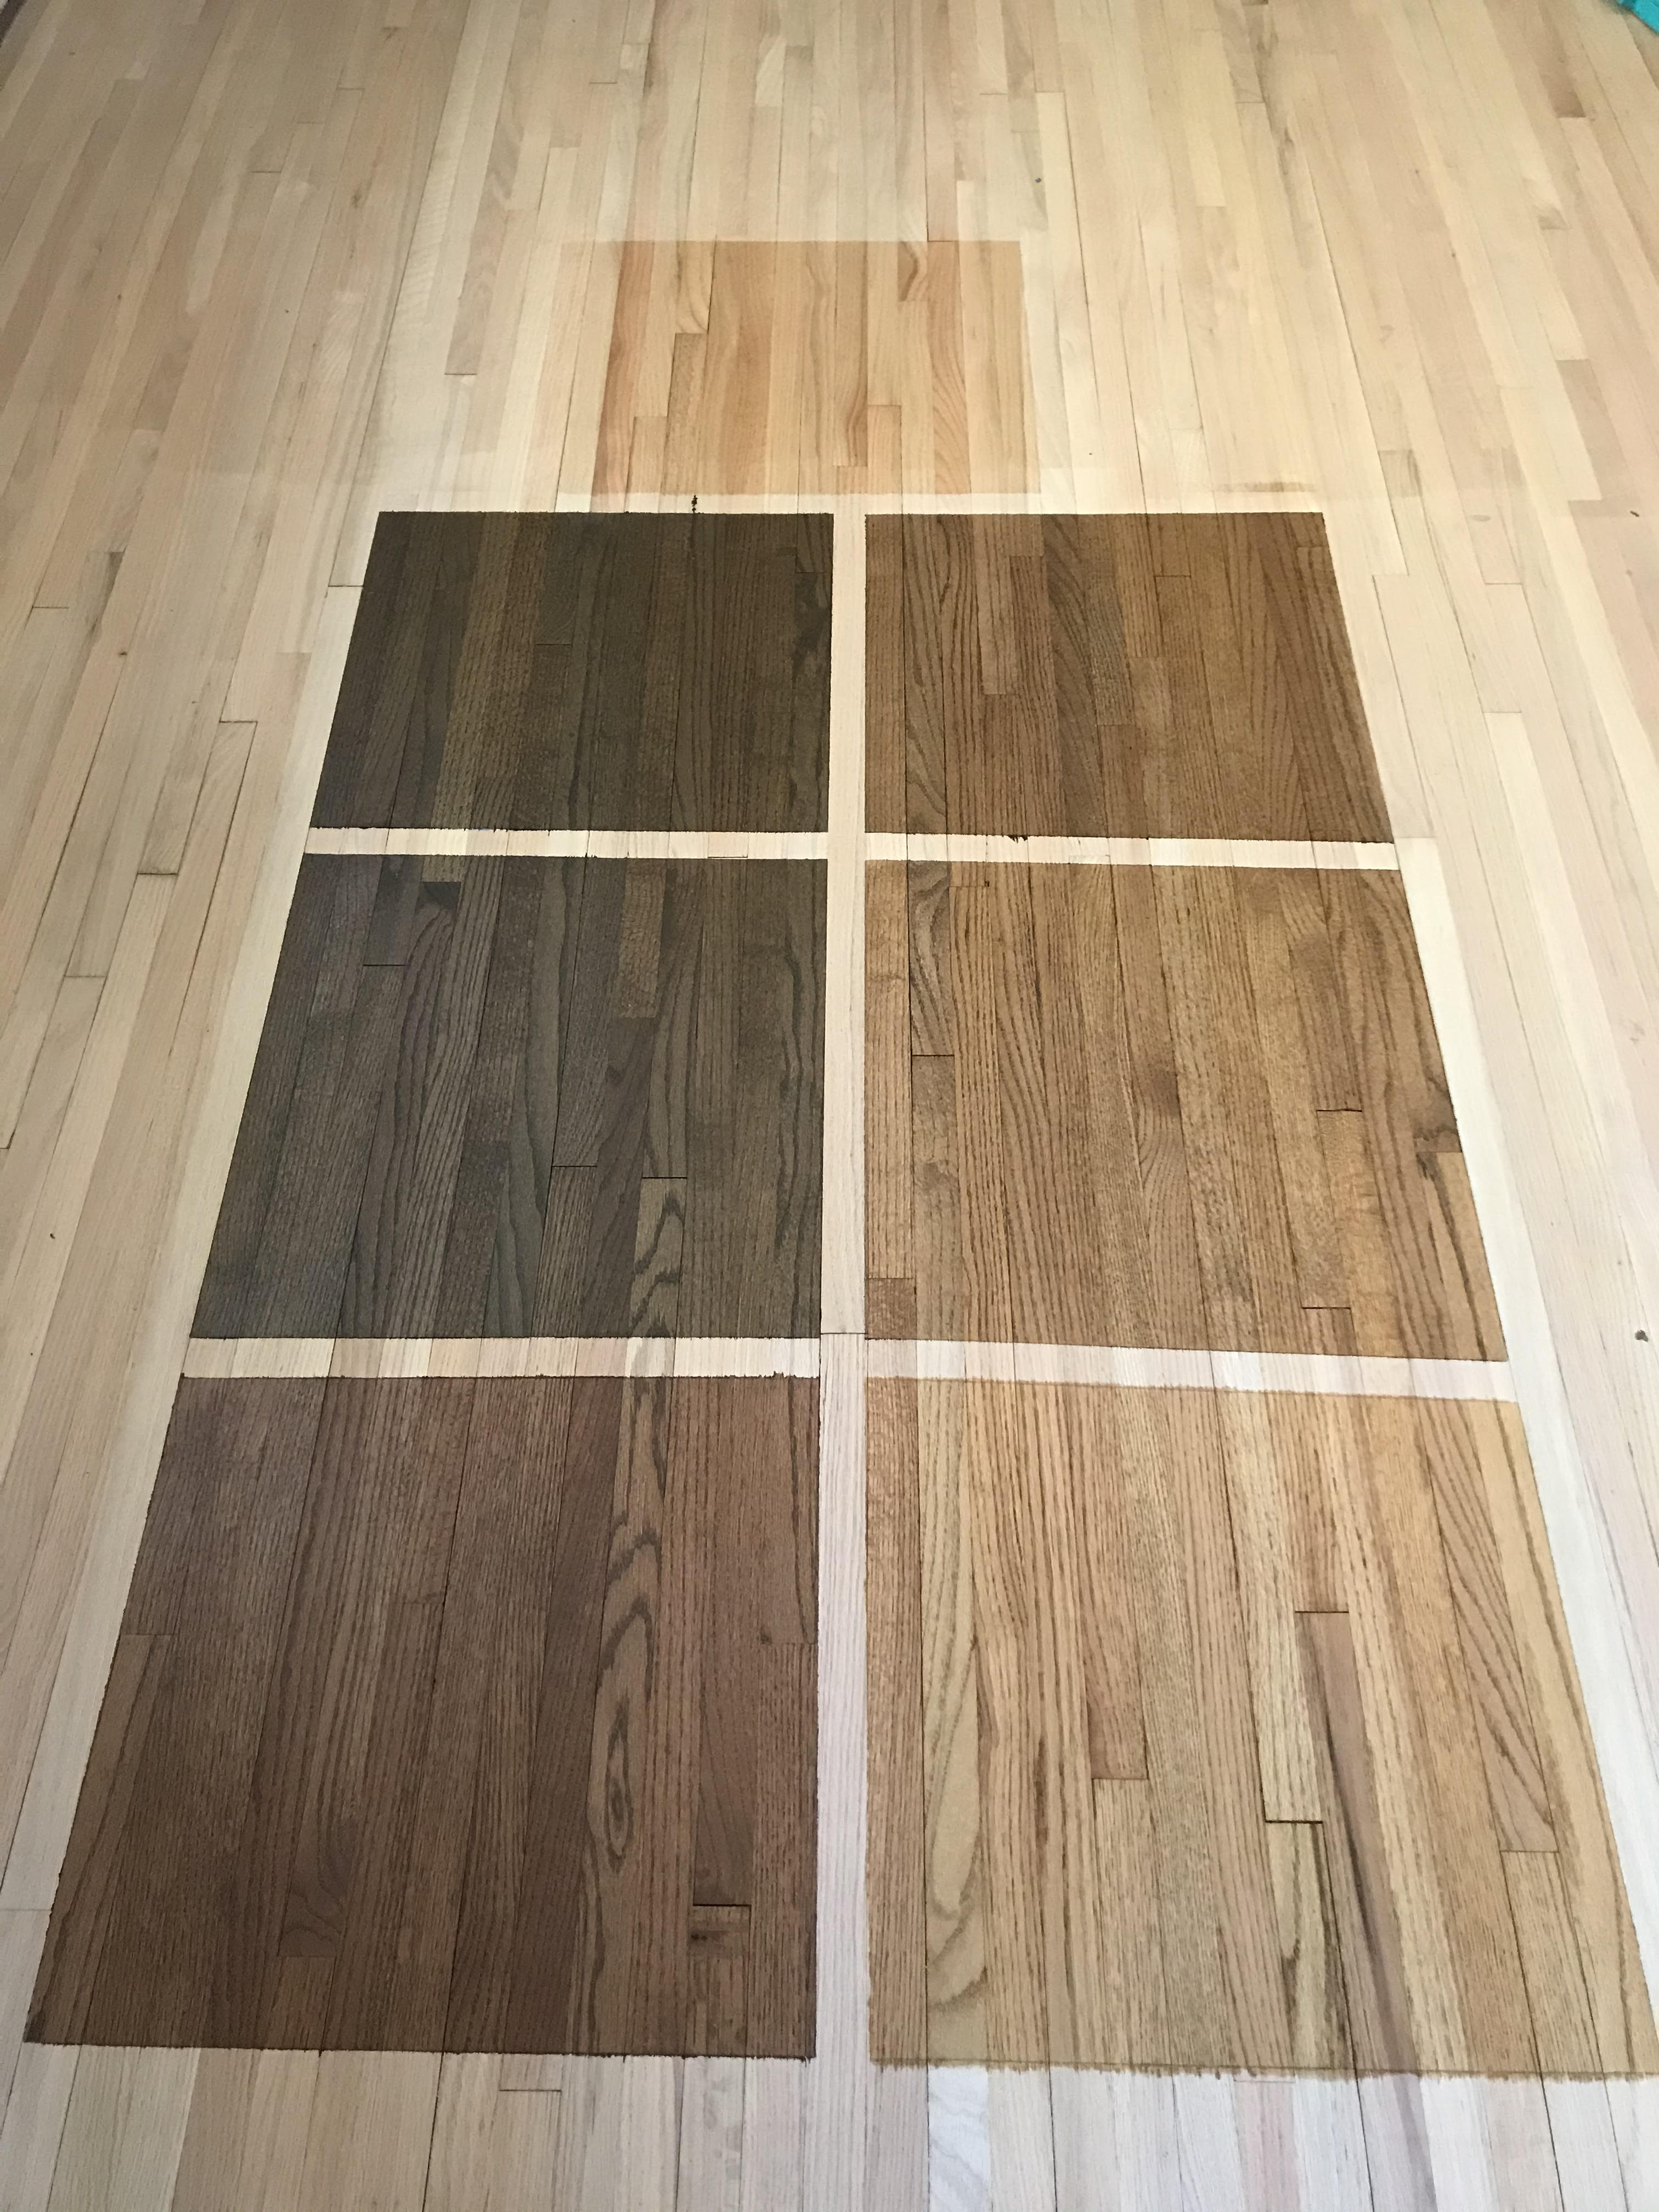 Hardwood Floor Refinishing Ub, How To Finish New Hardwood Floors